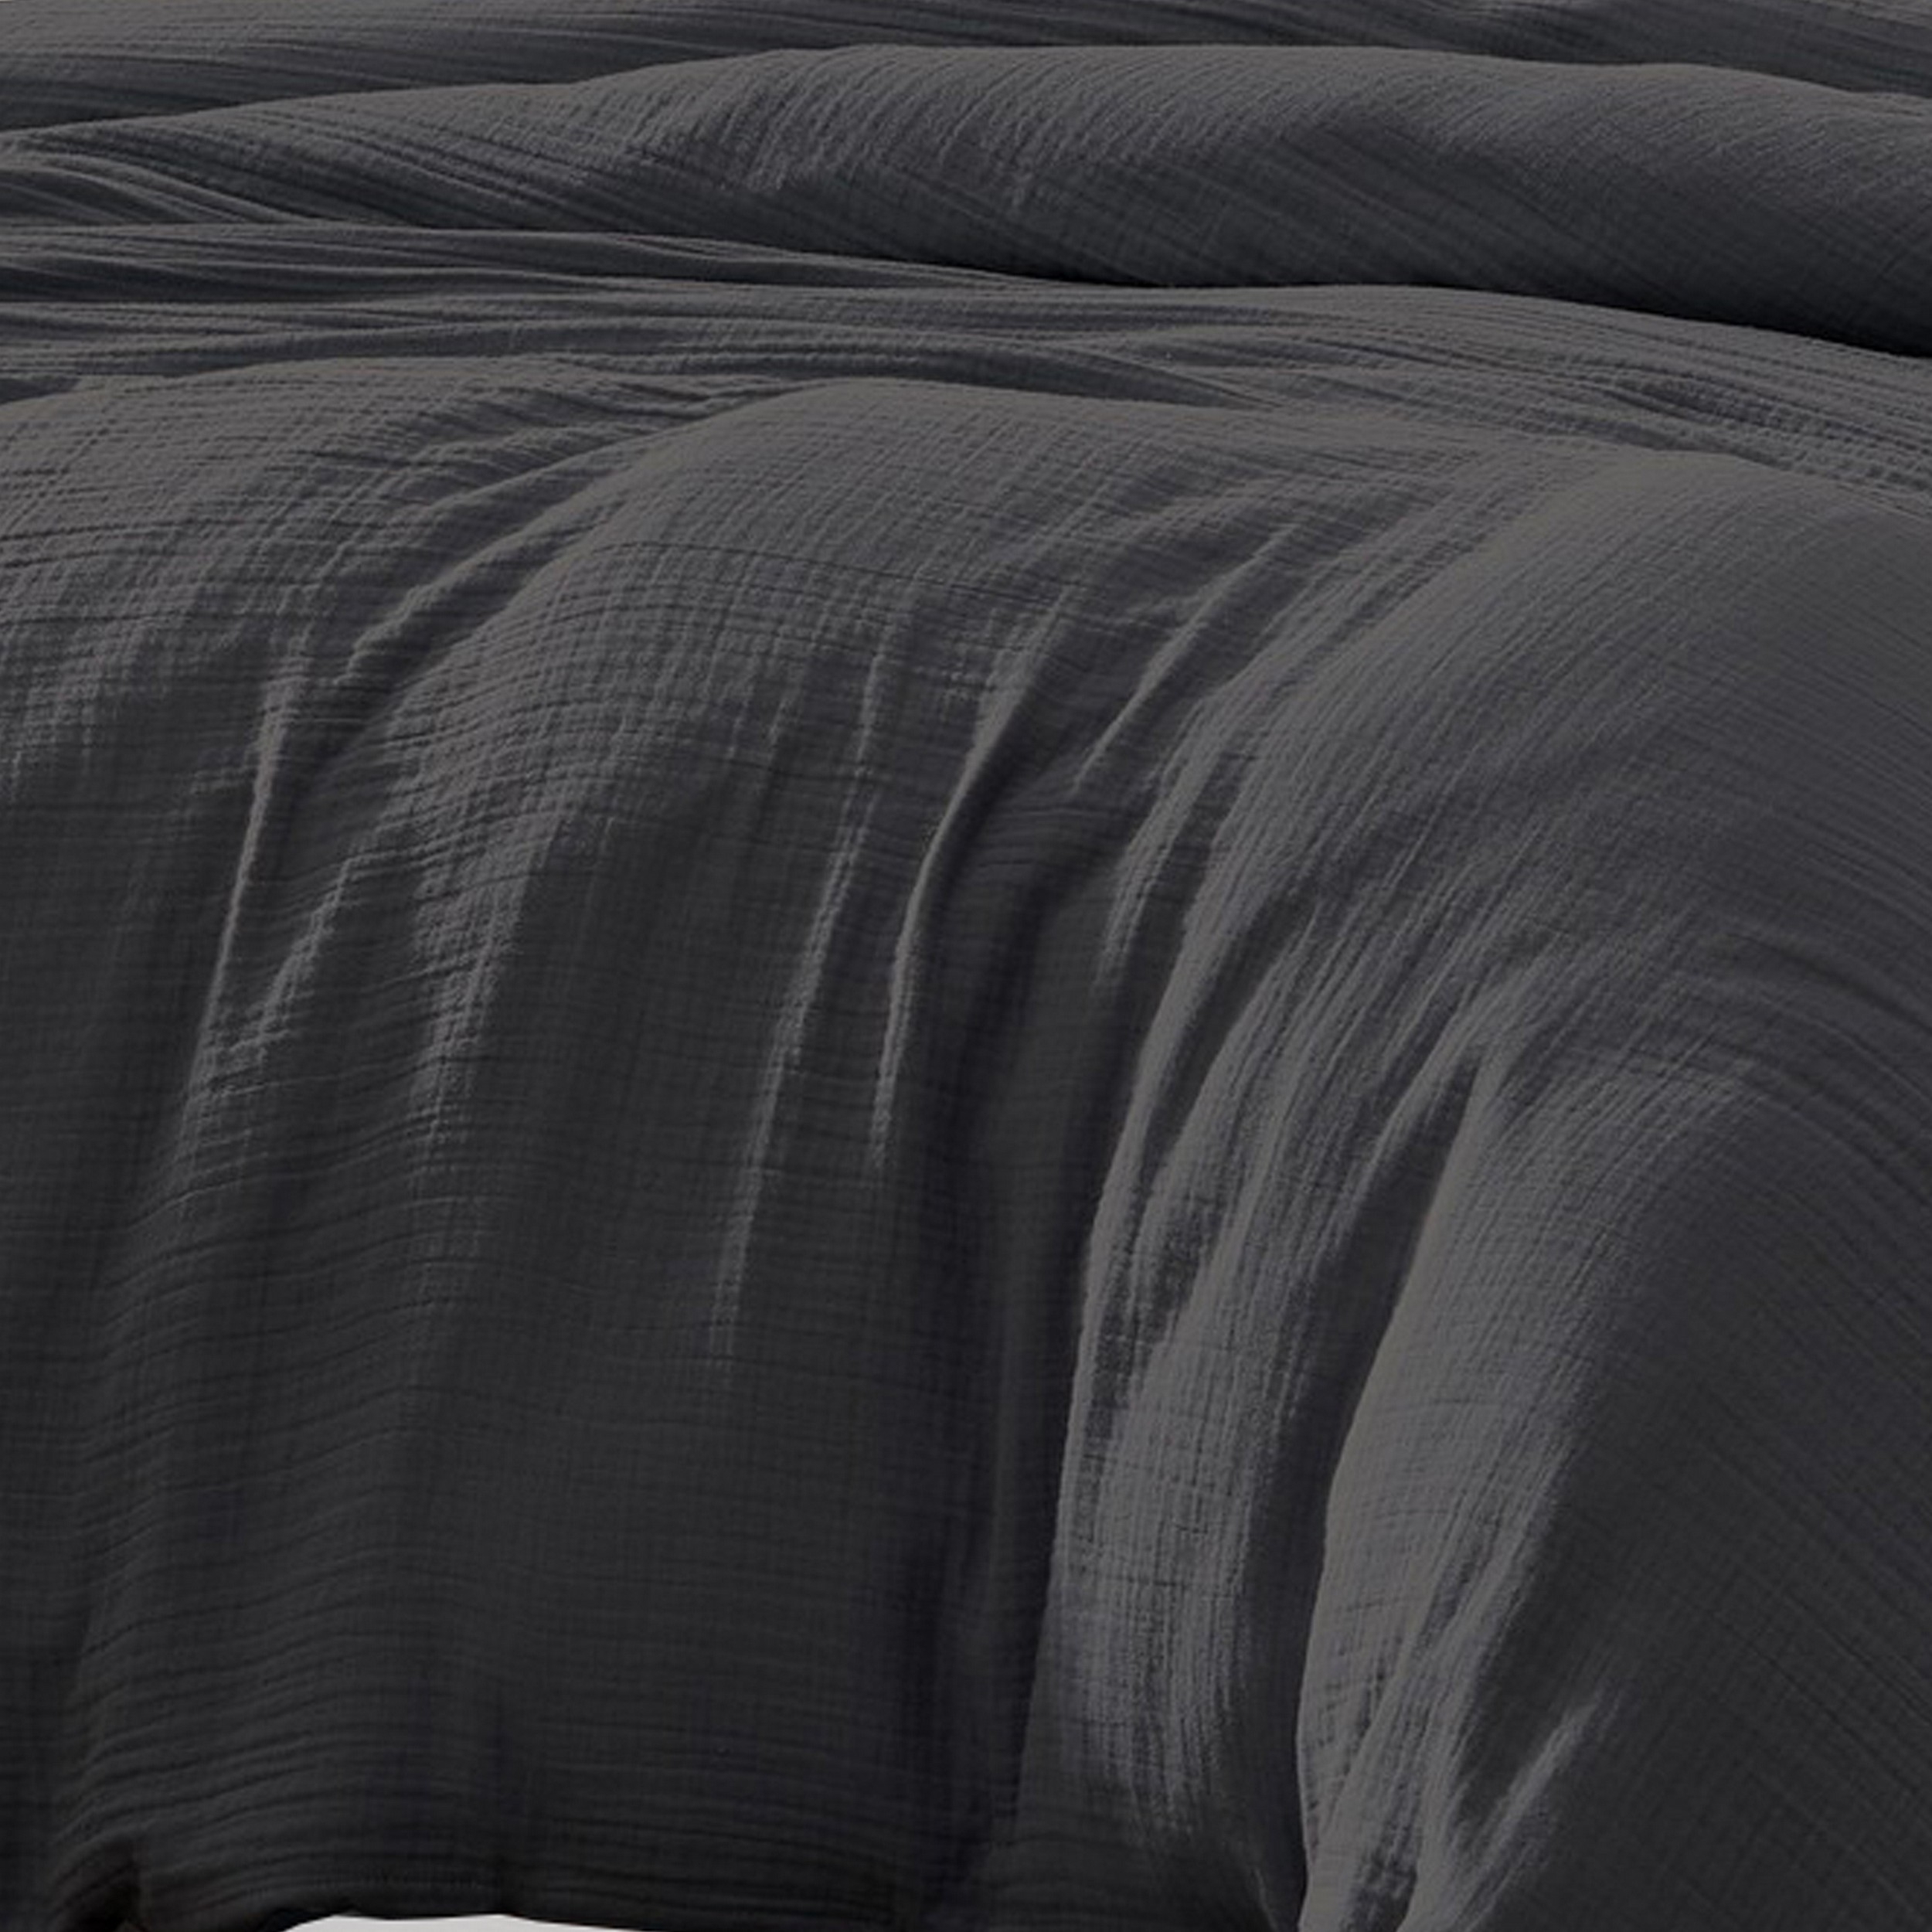 Uvi 3 Piece Queen Comforter Set, Cotton, Natural Crinkled Texture, Black - Saltoro Sherpi